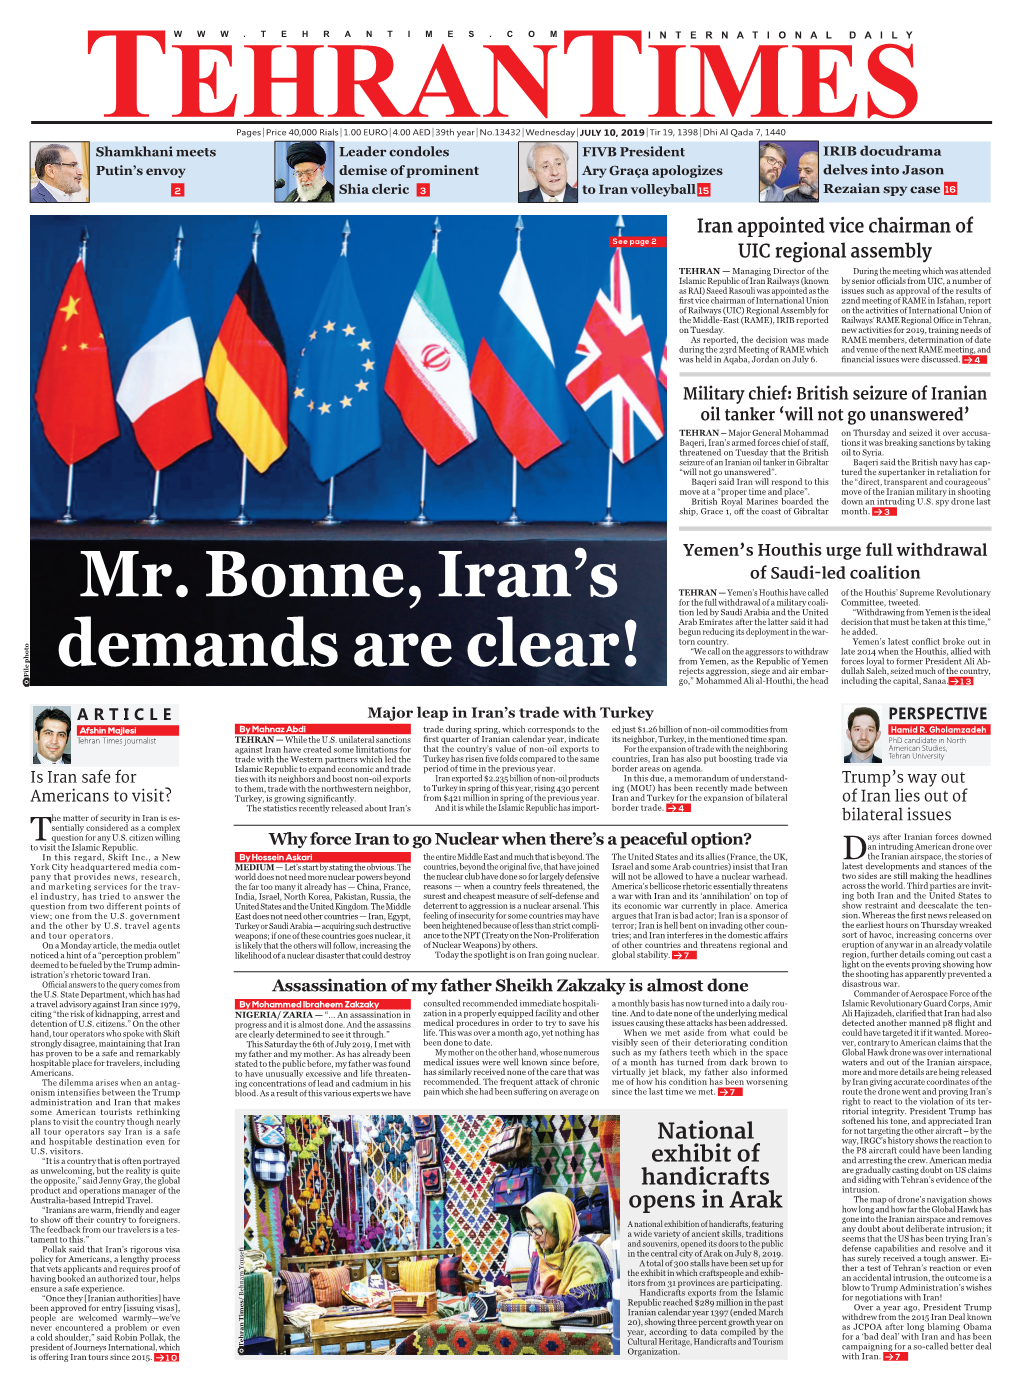 Mr. Bonne, Iran's Demands Are Clear!